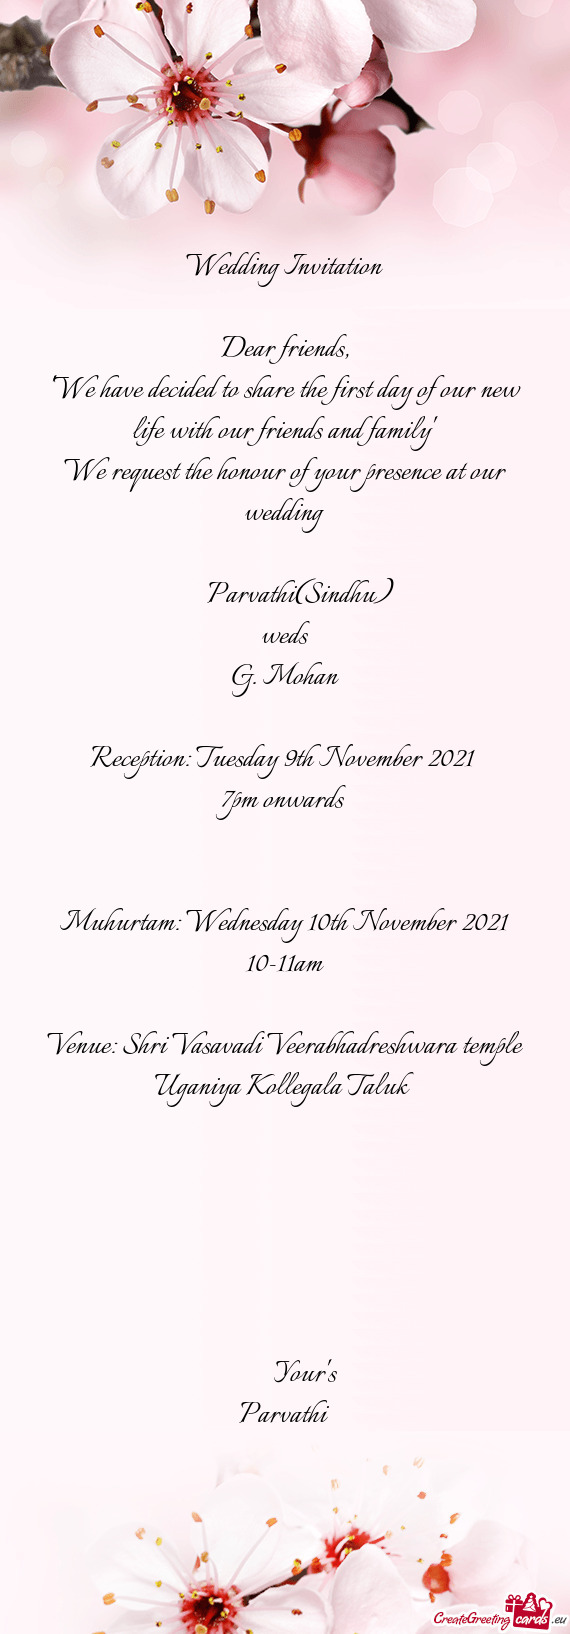 Reception: Tuesday 9th November 2021